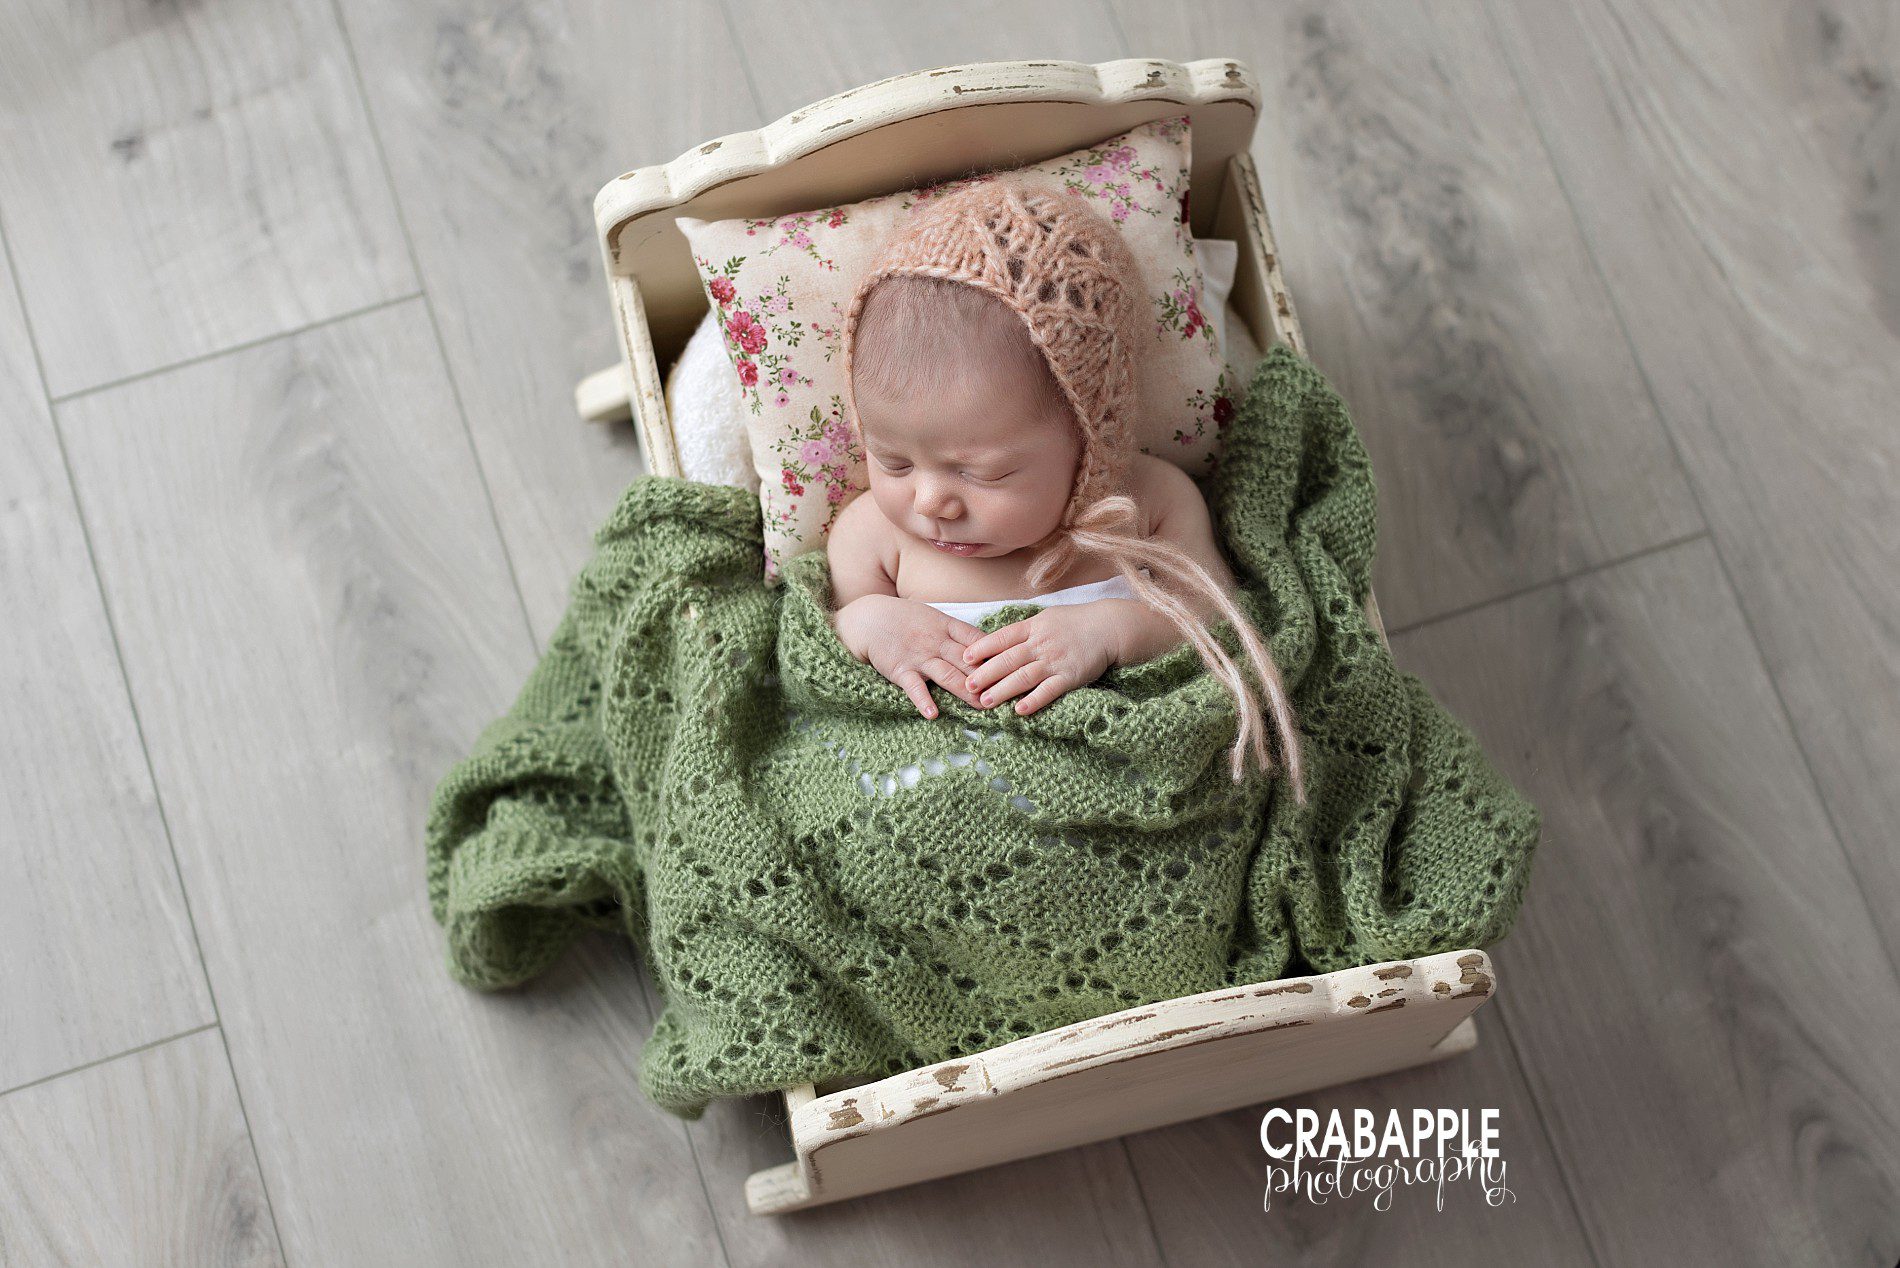 using green in newborn photos for girls